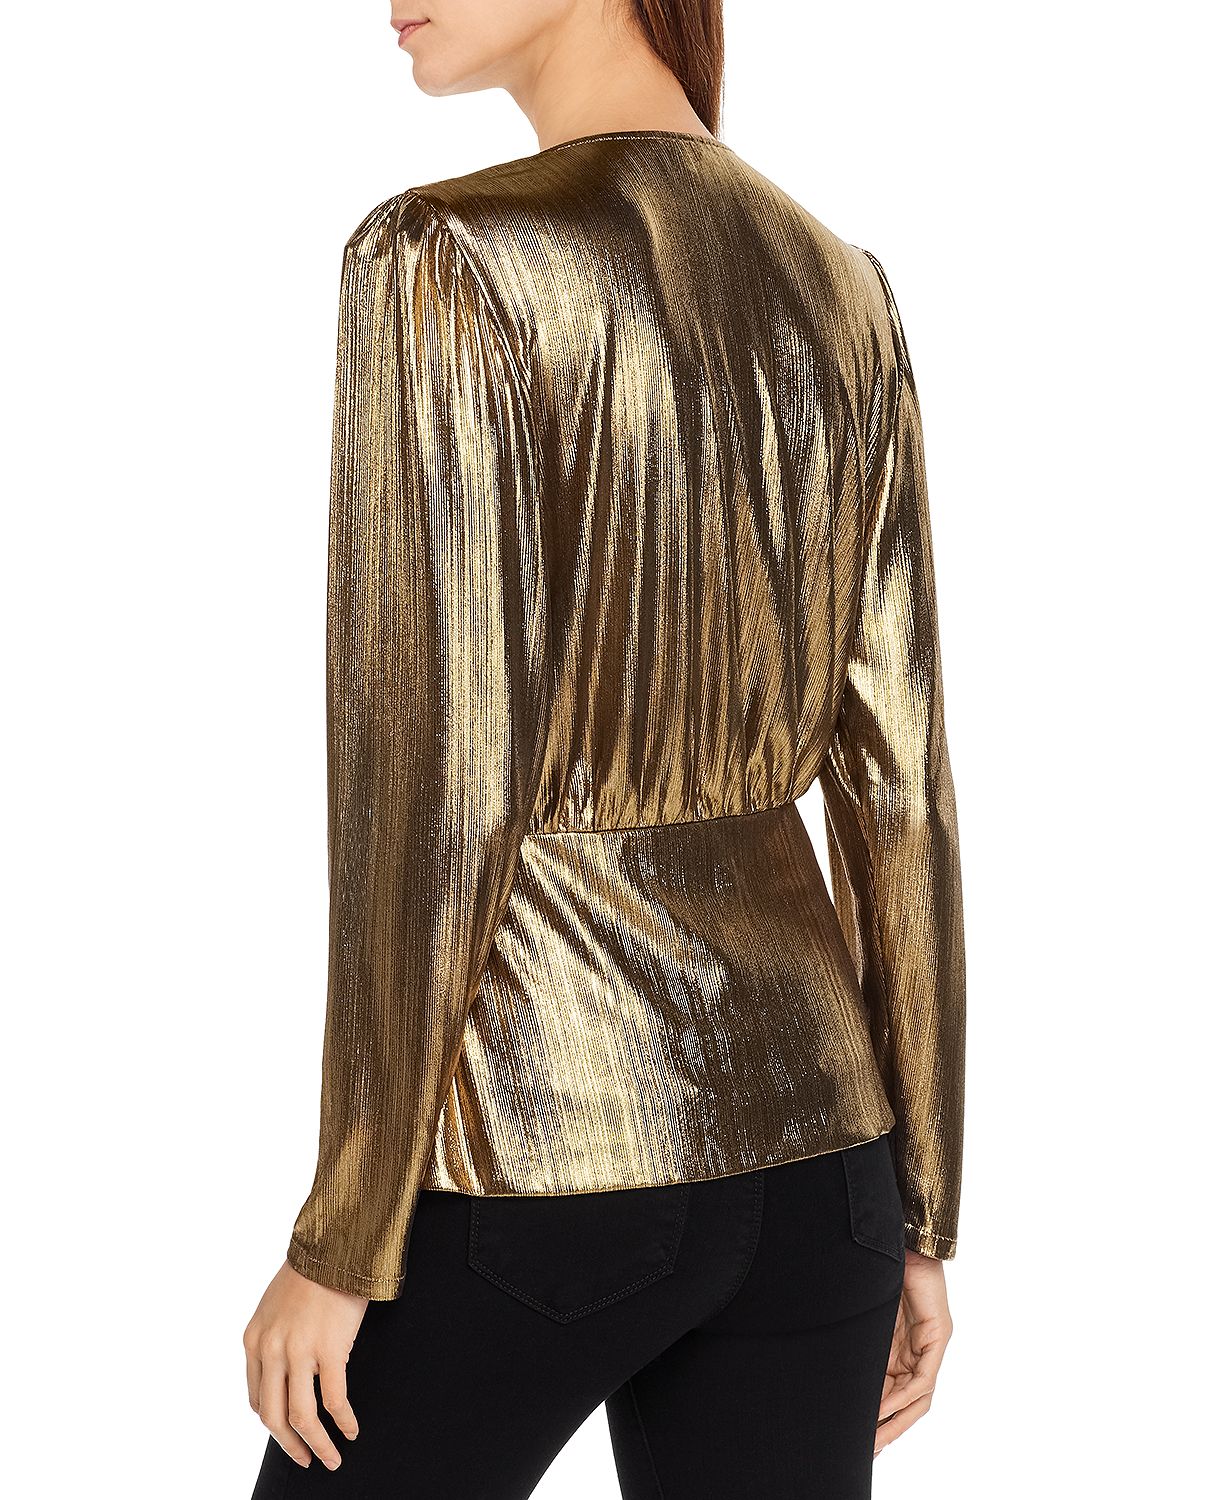 woocommerce-673321-2209615.cloudwaysapps.com-lini-womens-gold-metallic-alexandra-lame-wrap-top-blouse